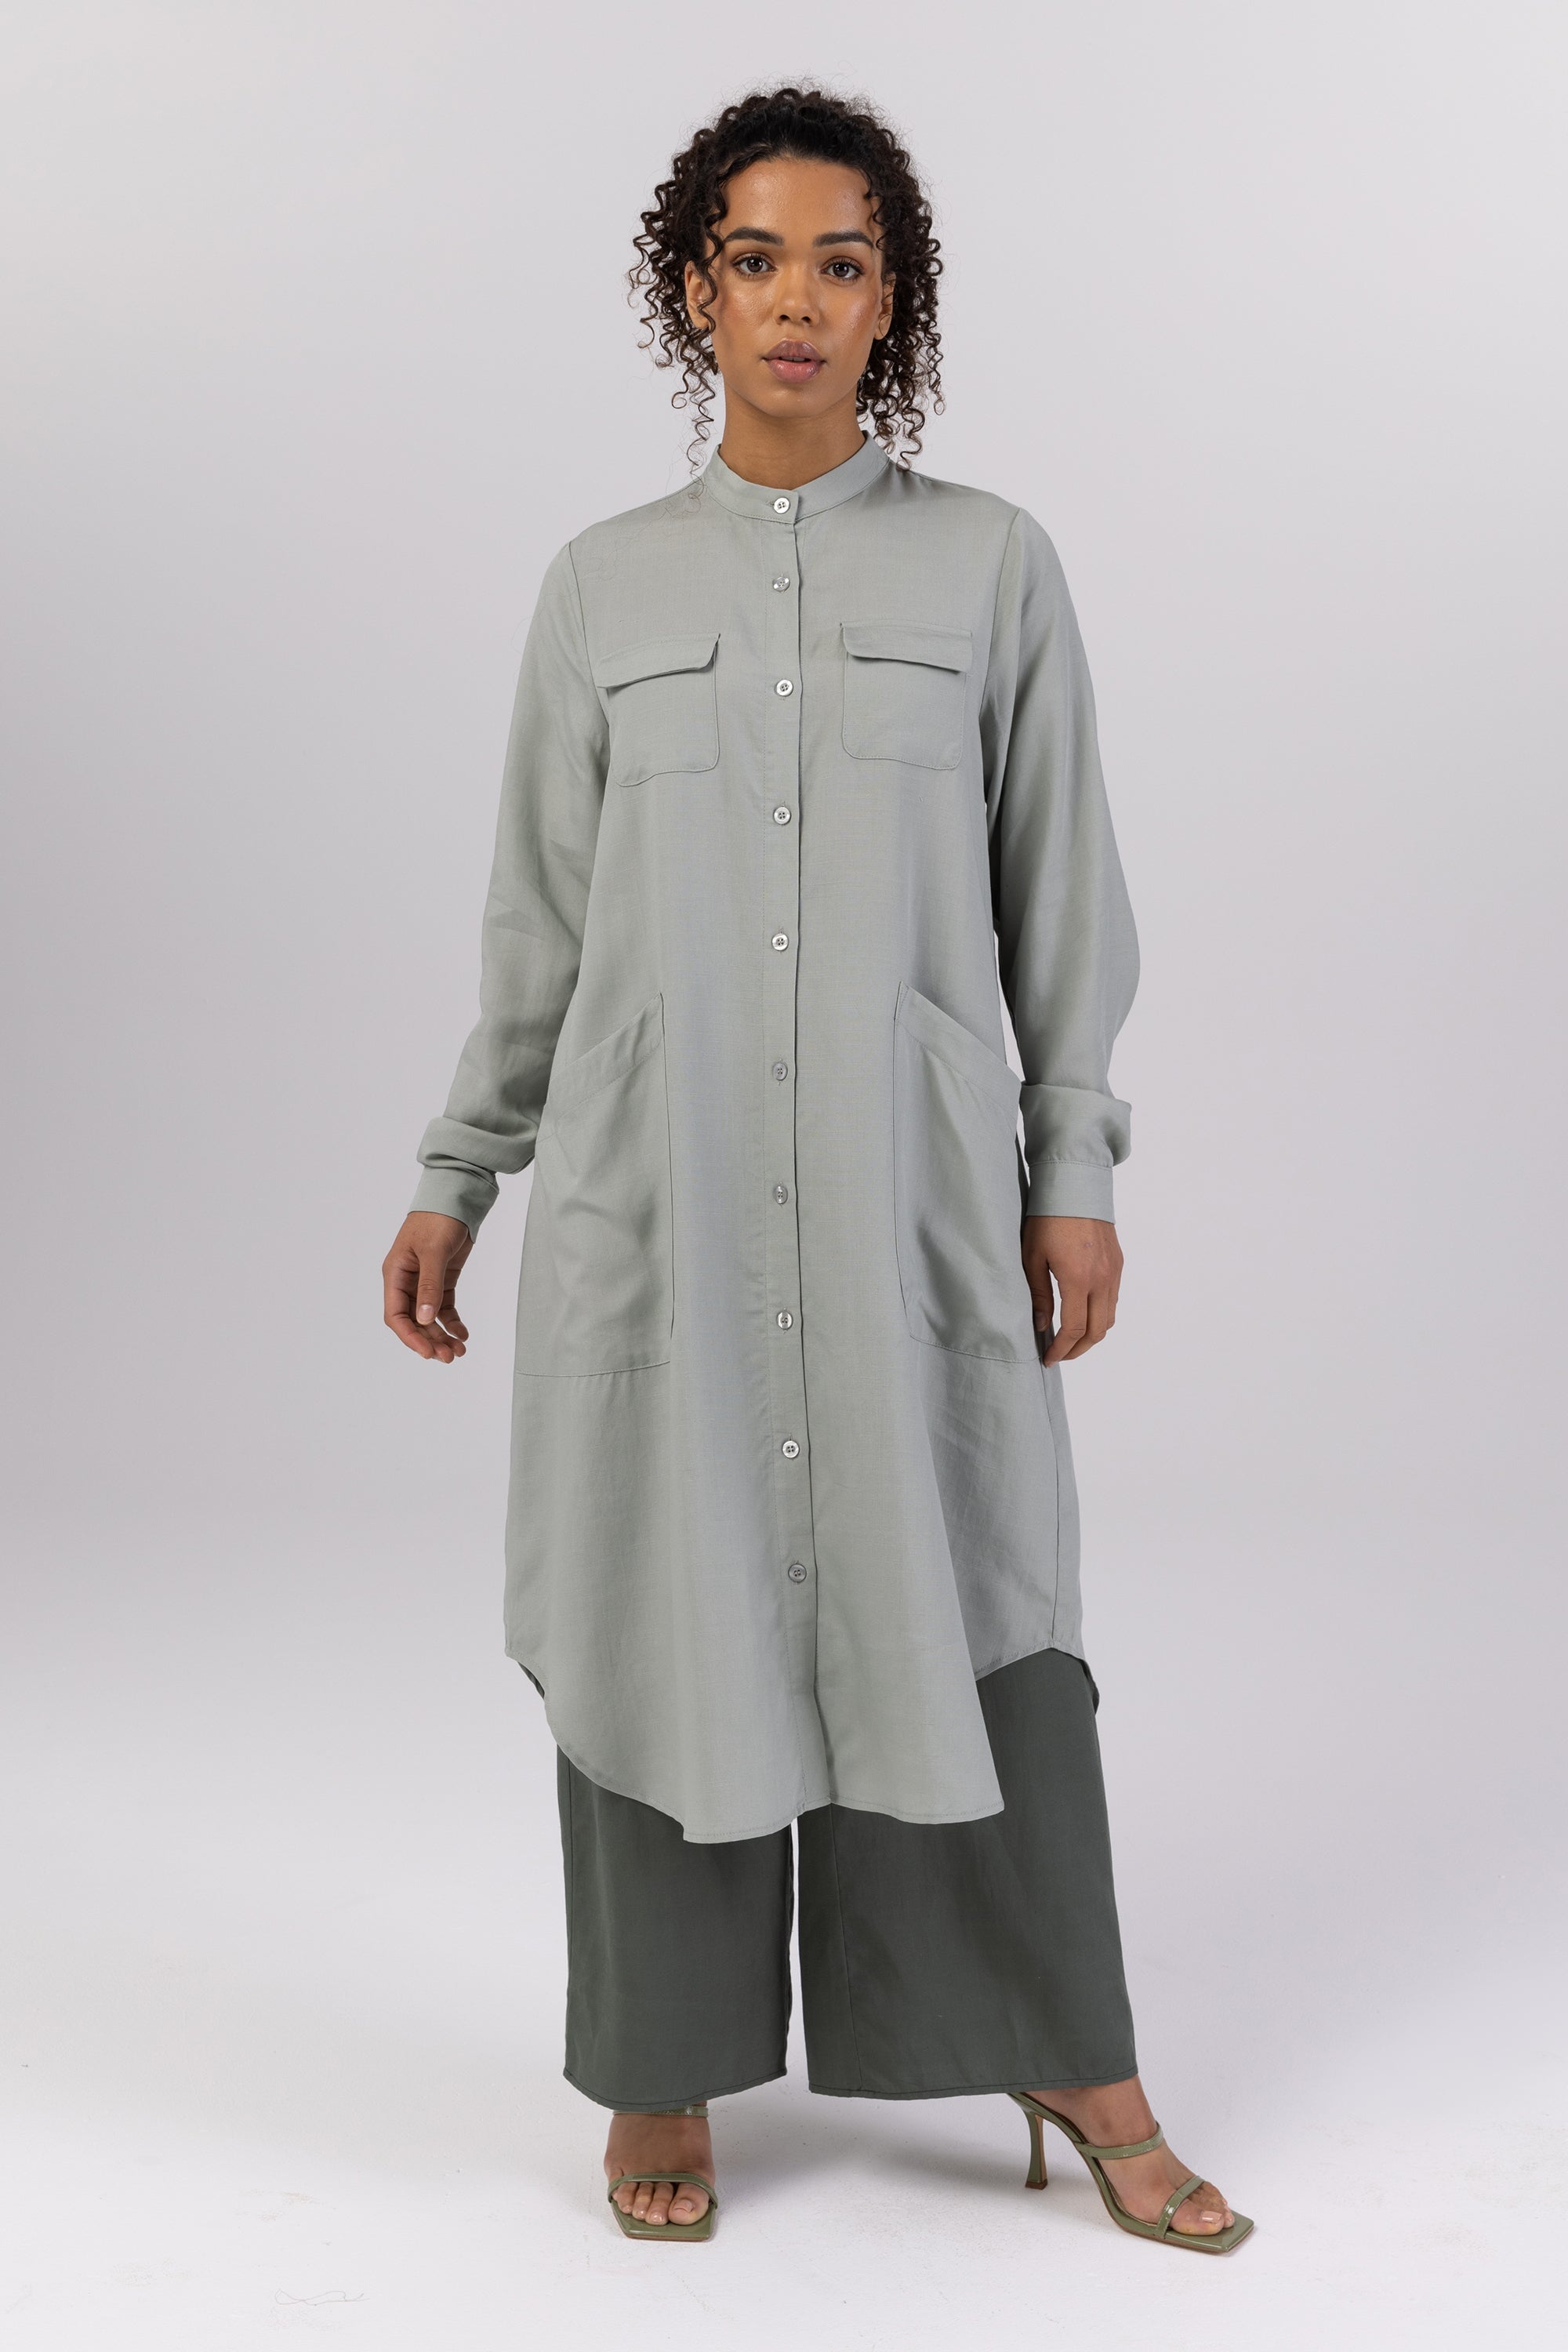 Nadine Cotton Linen Button Down Utility Tunic - Light Sage (Stillwater) Veiled Collection 